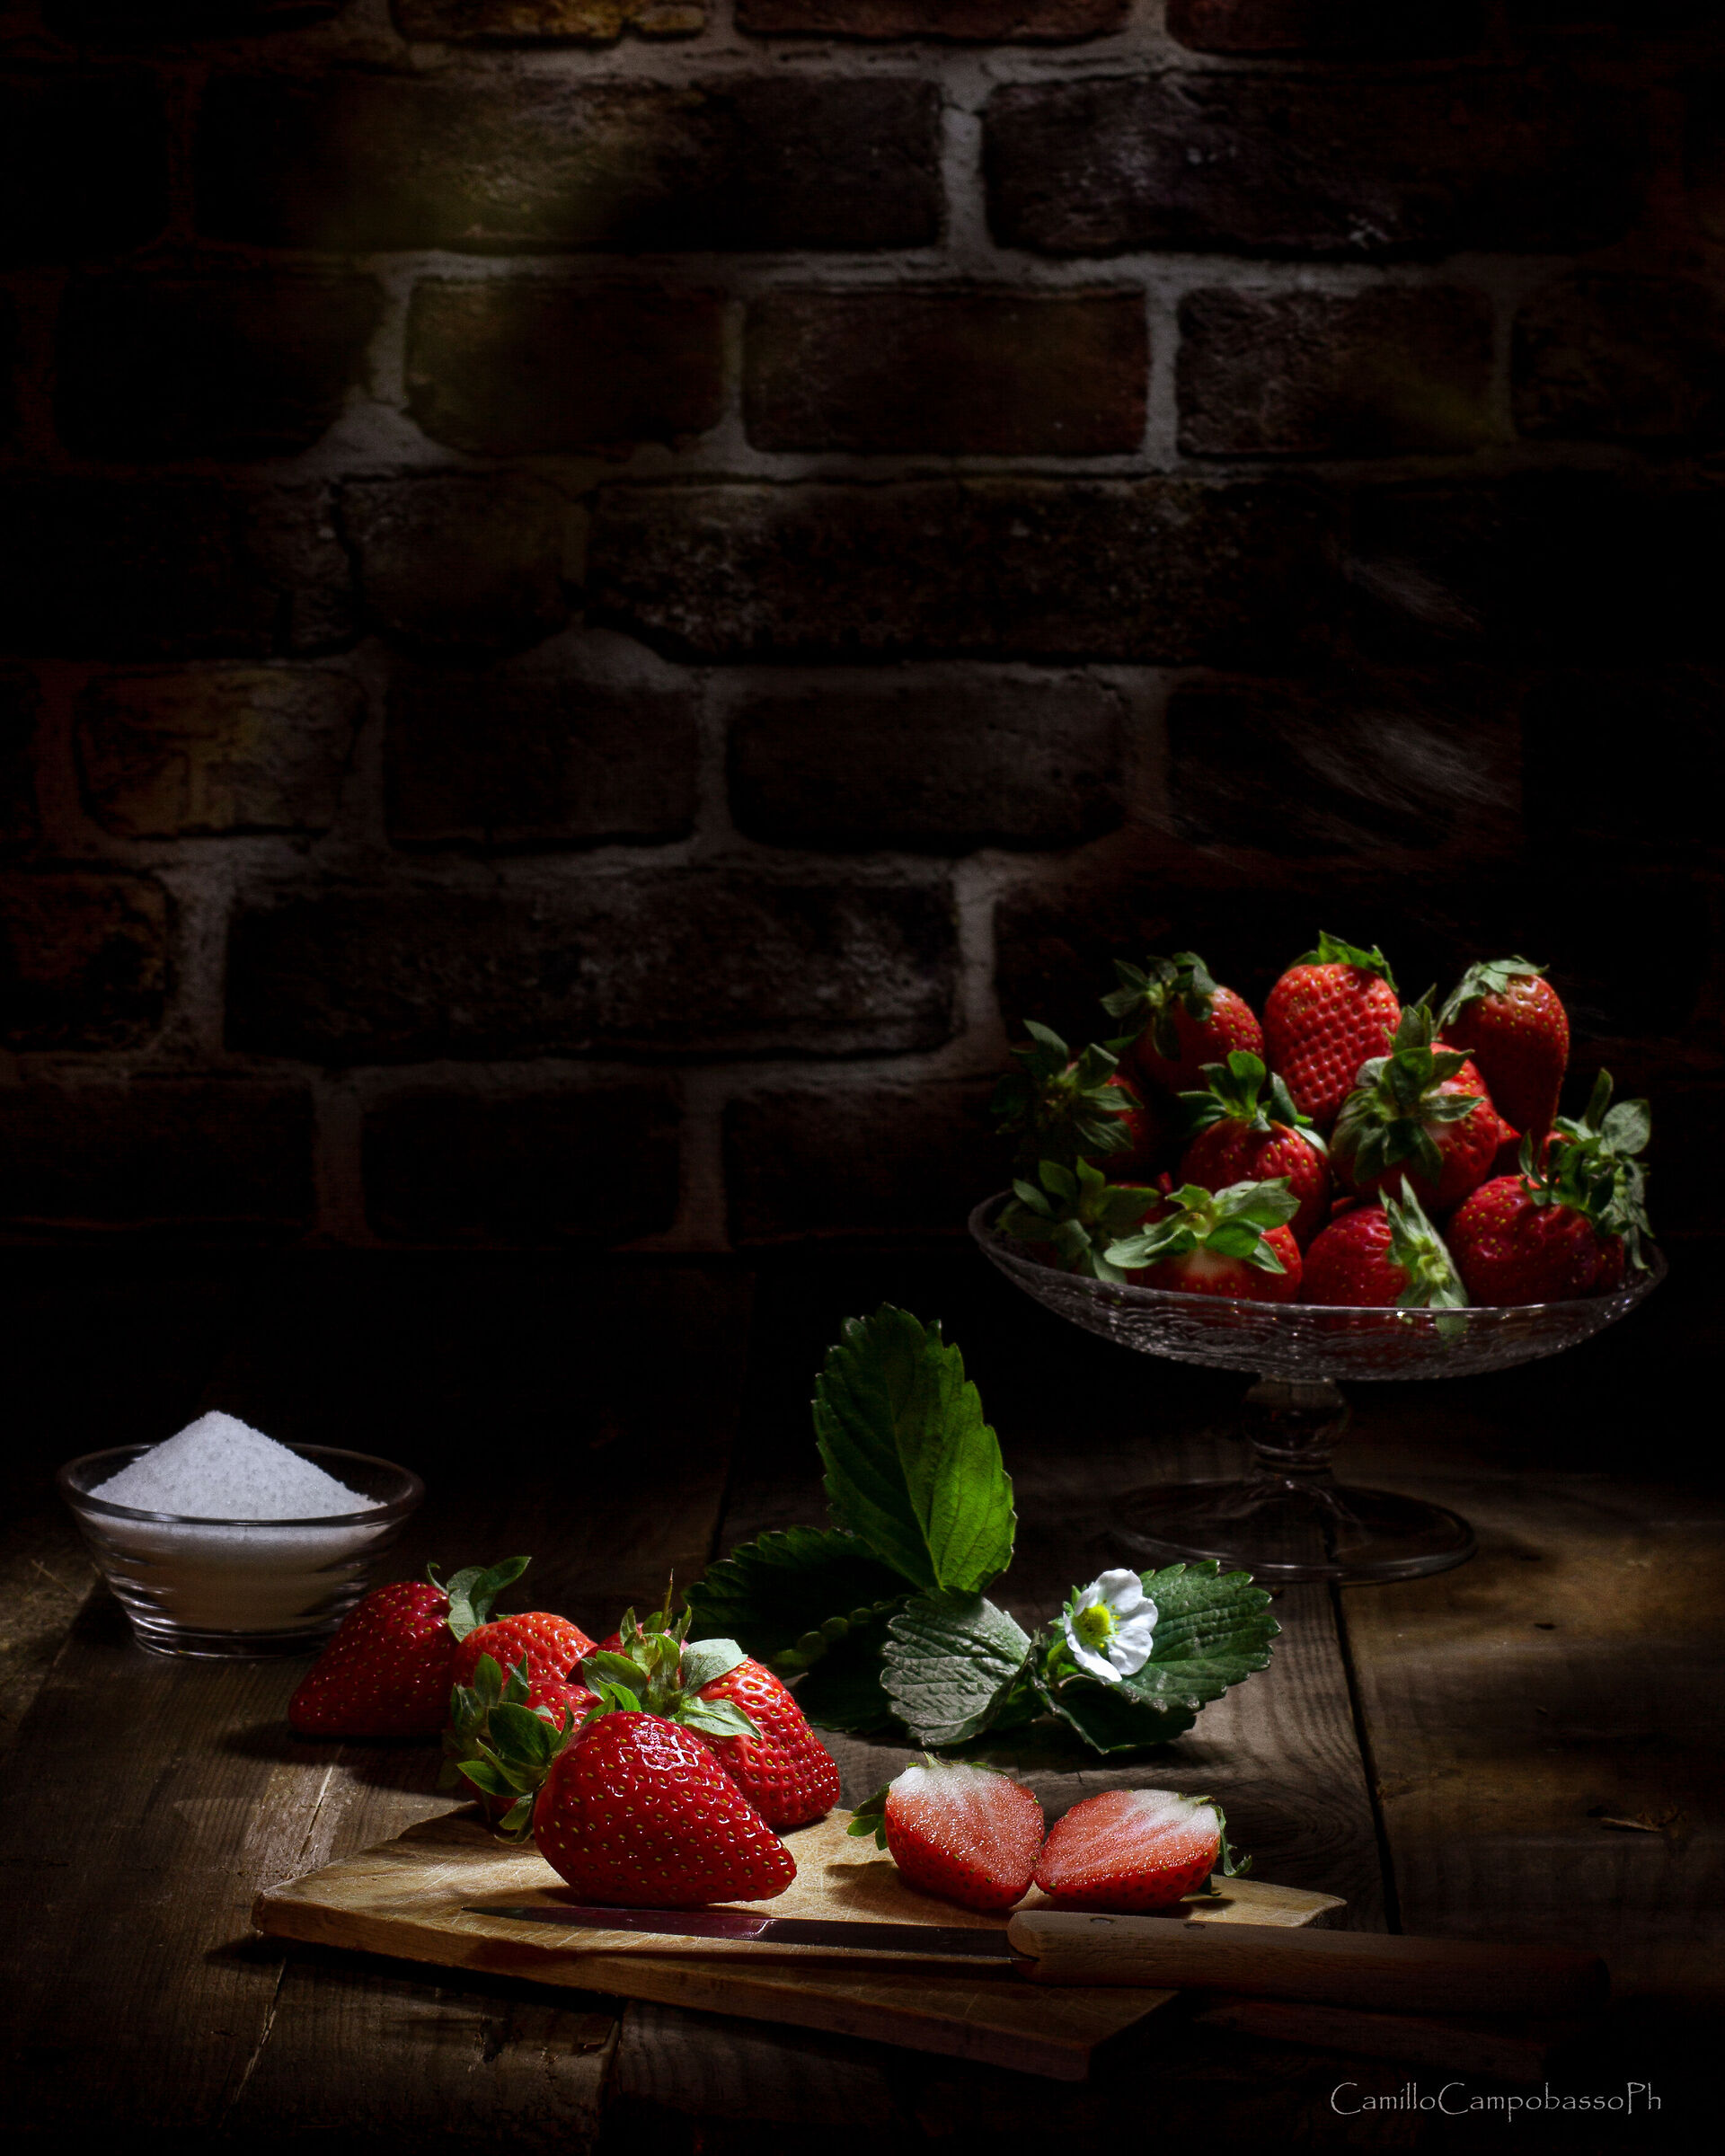 Strawberries in triumph...